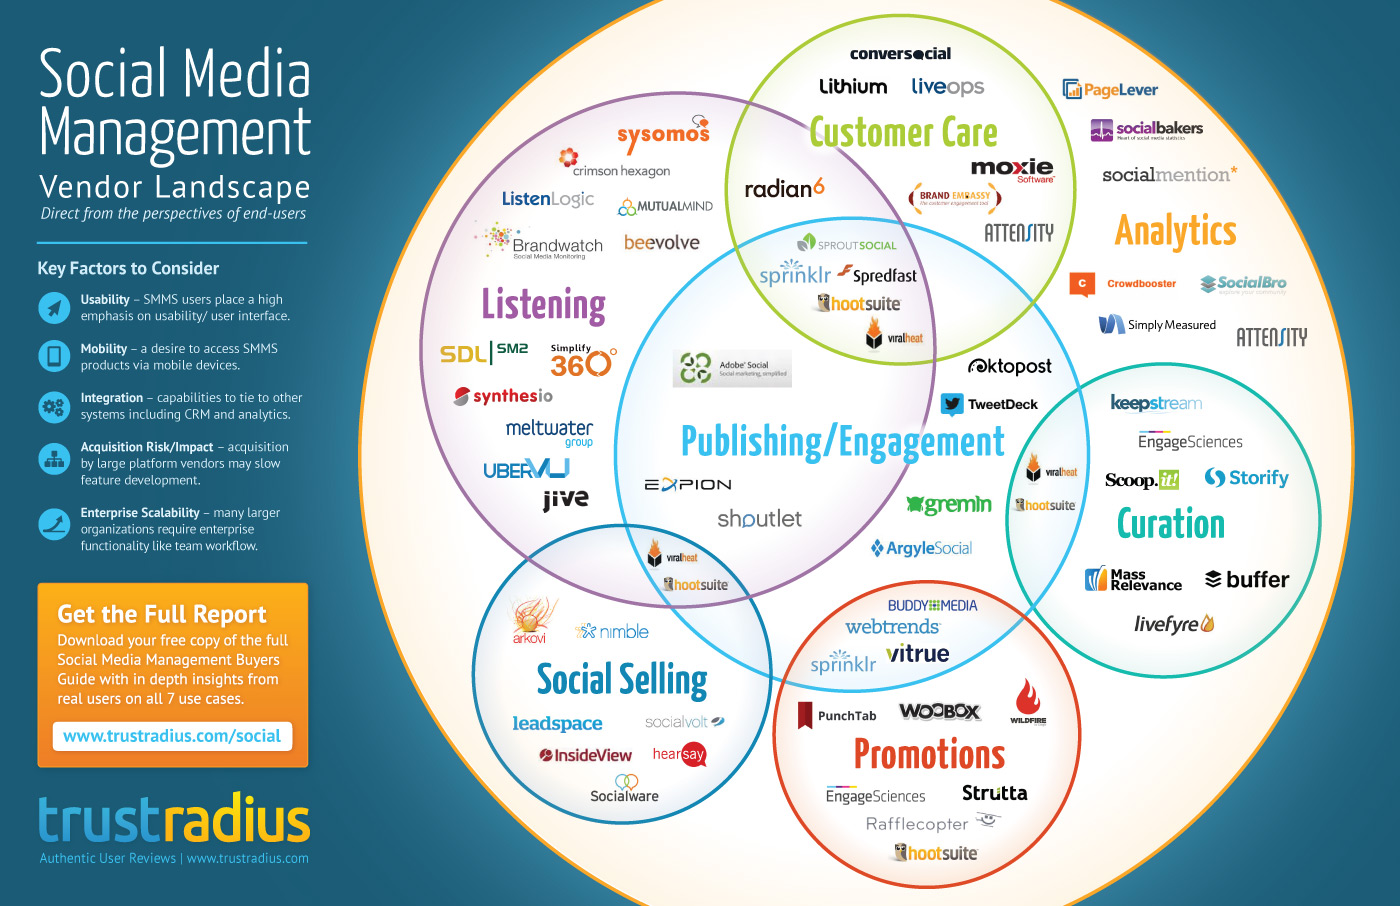 Social Media Management Software vendor infographic